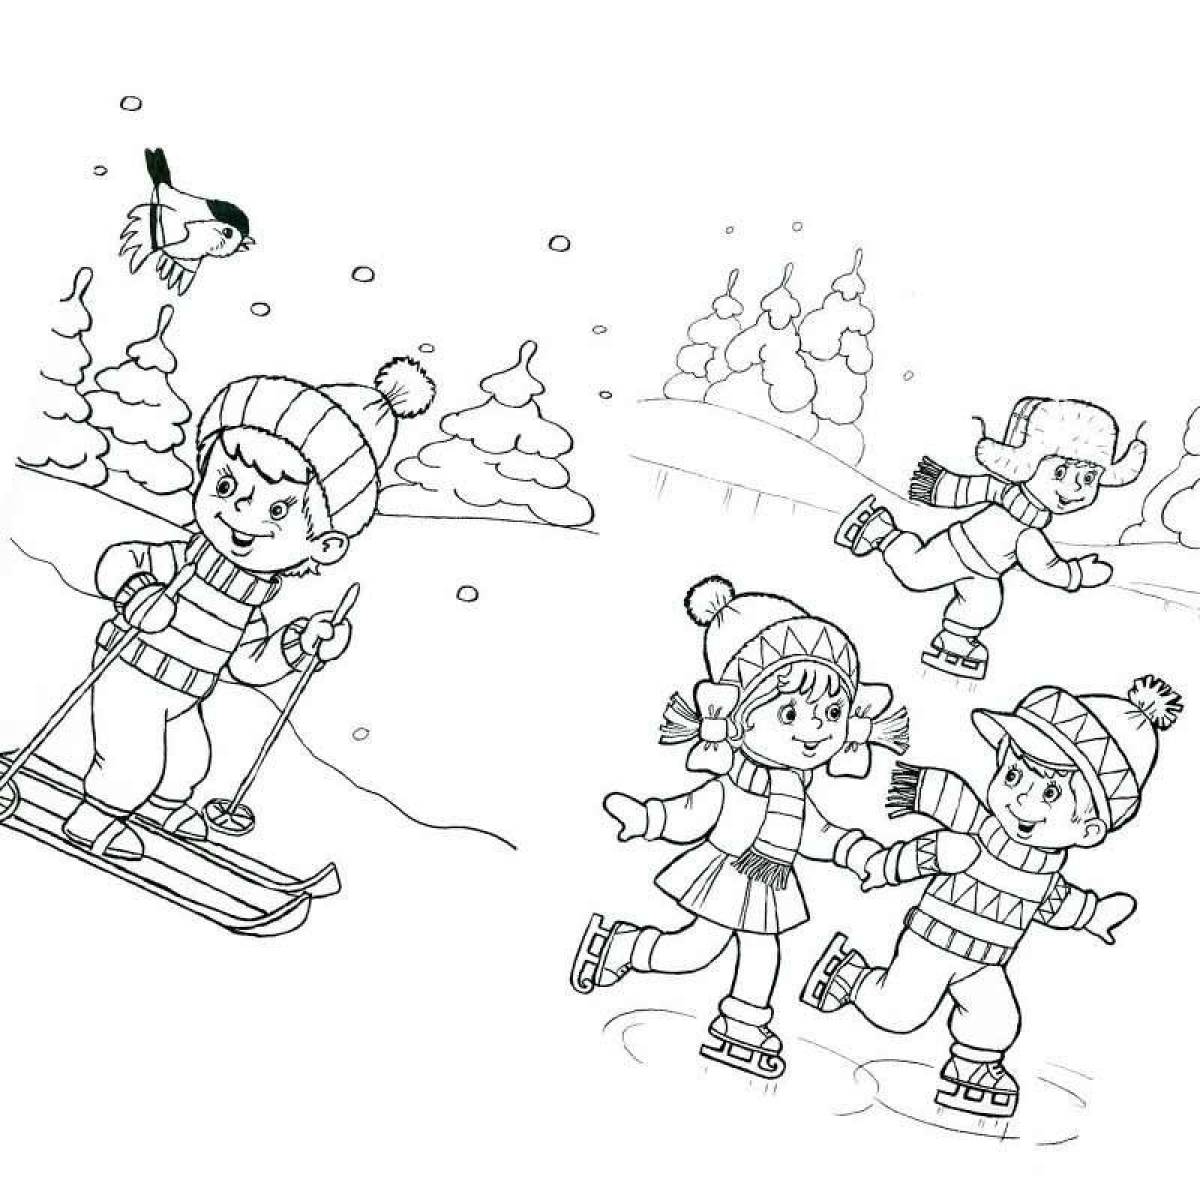 Preparatory winter sports #5